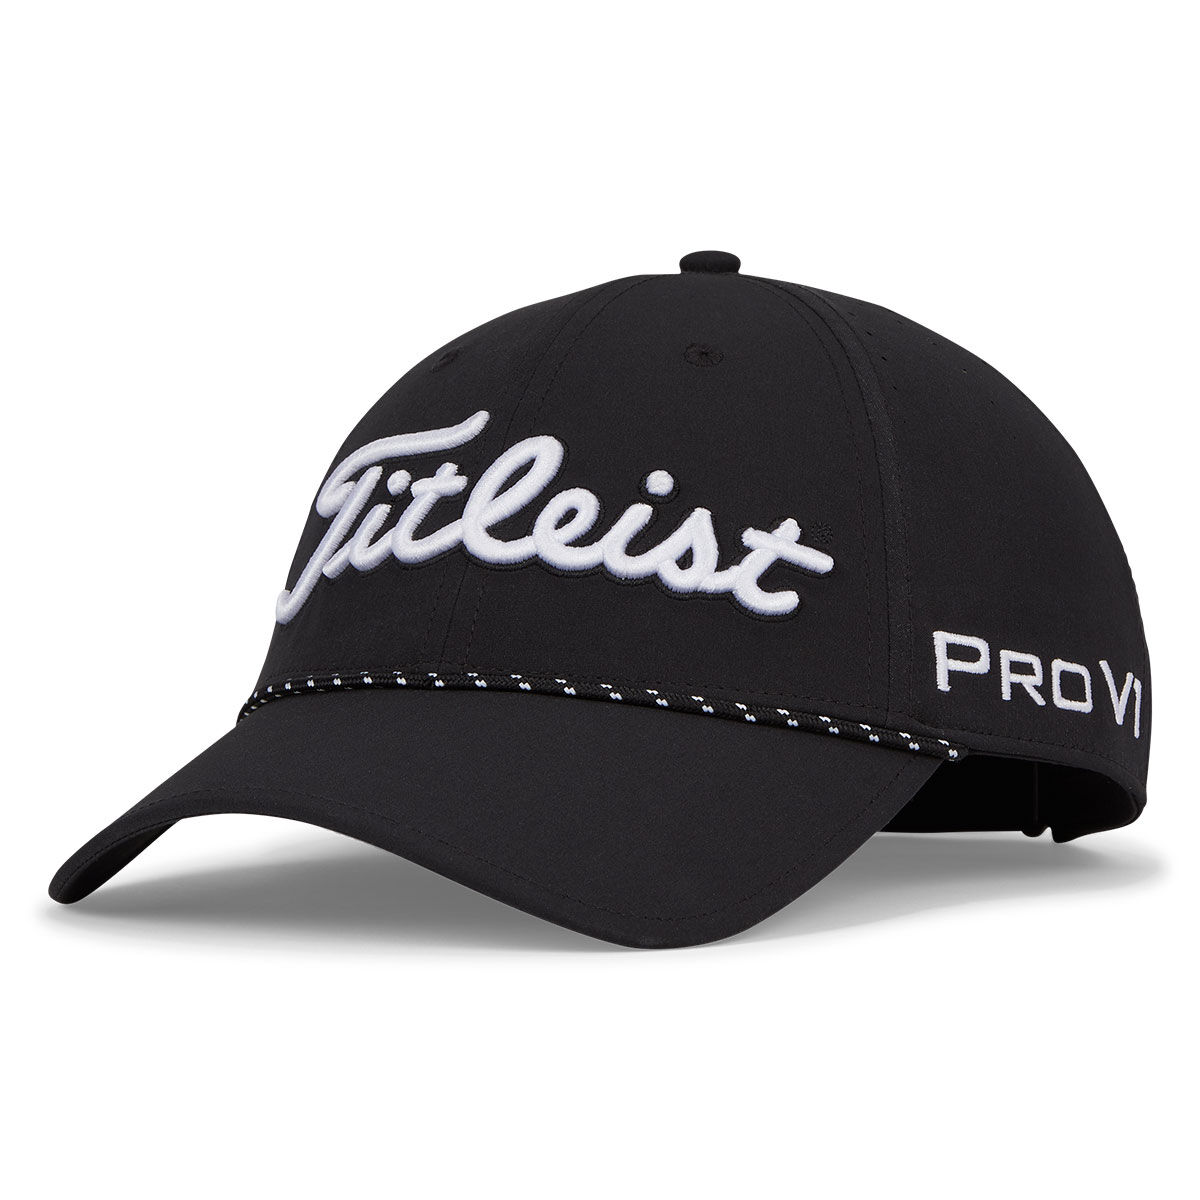 Titleist Men’s Black and White Lightweight Tour Breezer Rope Golf Cap | American Golf, One Size